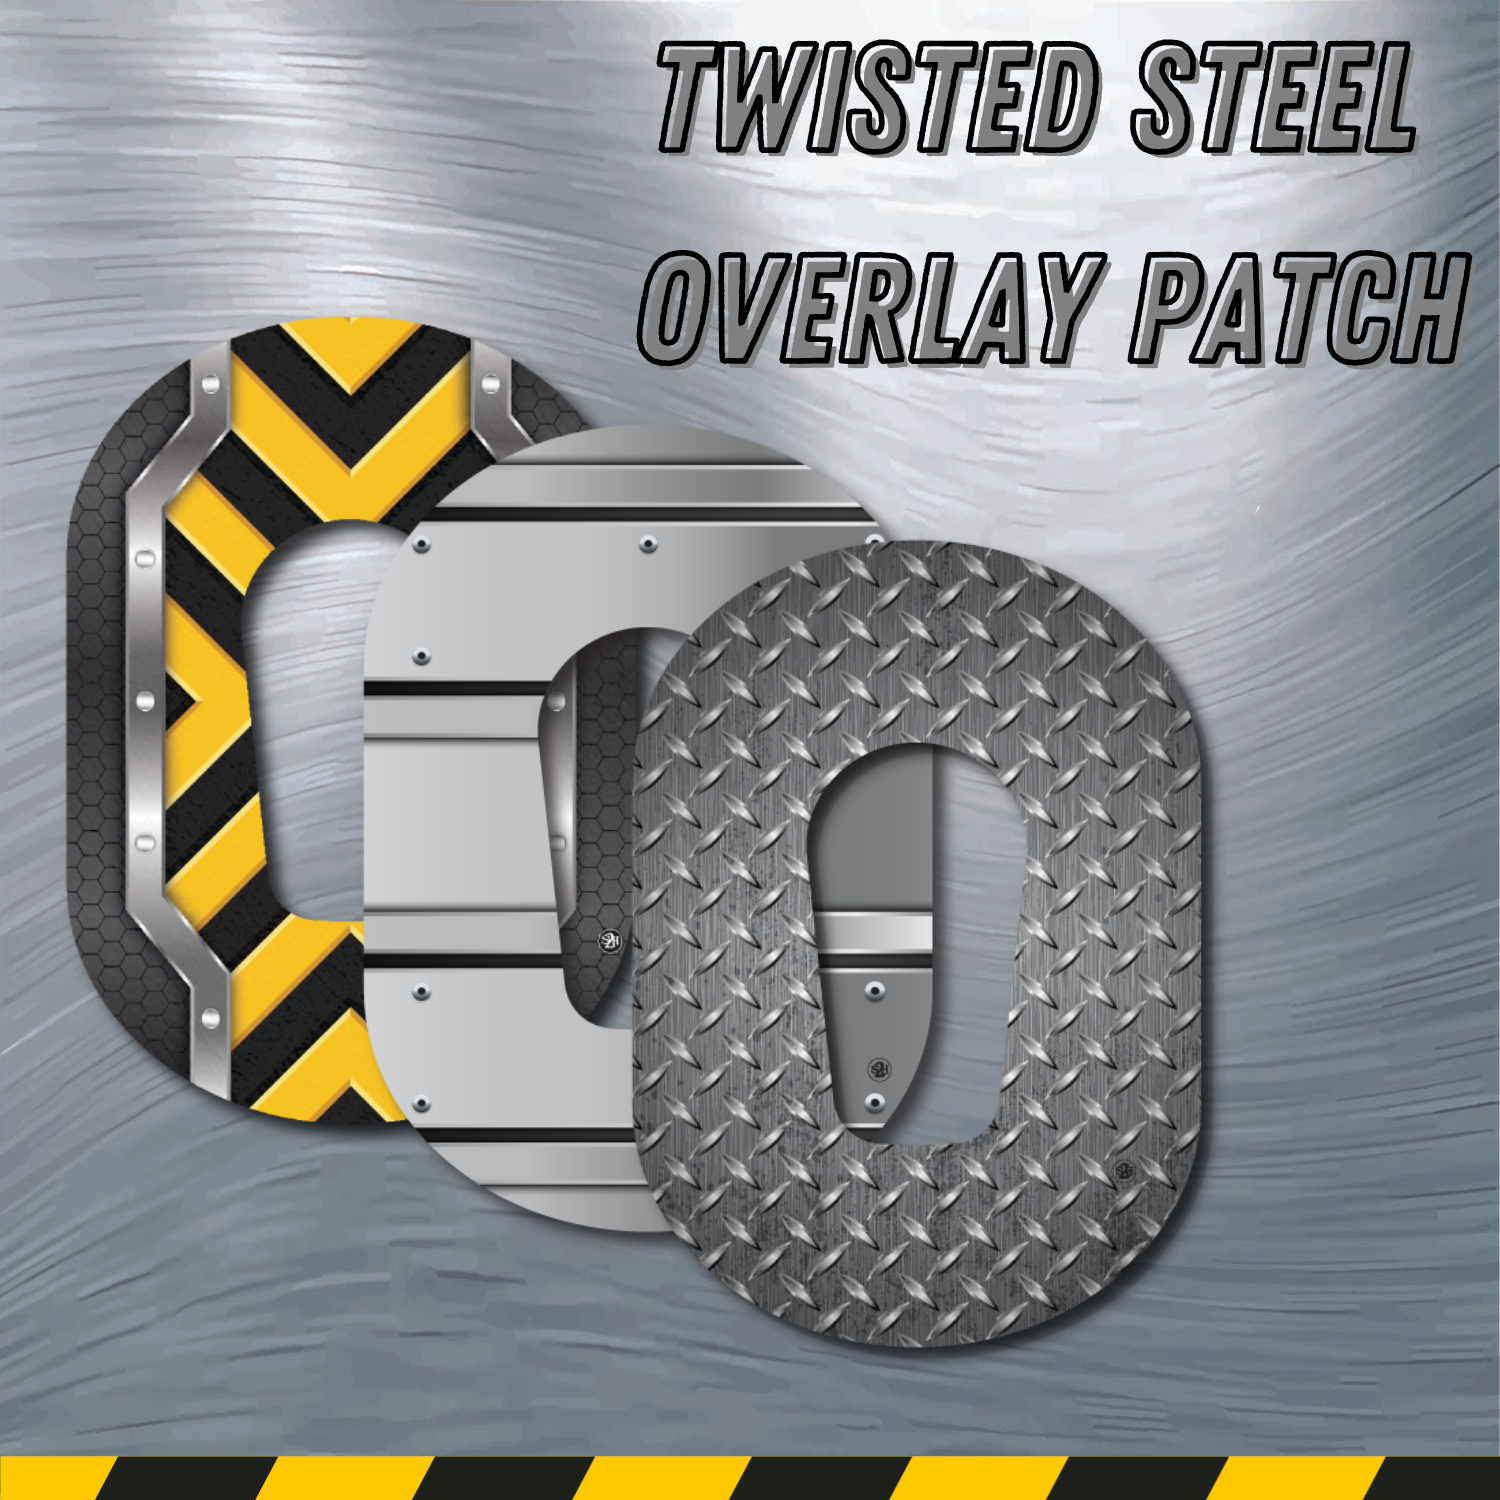 Twisted Steel